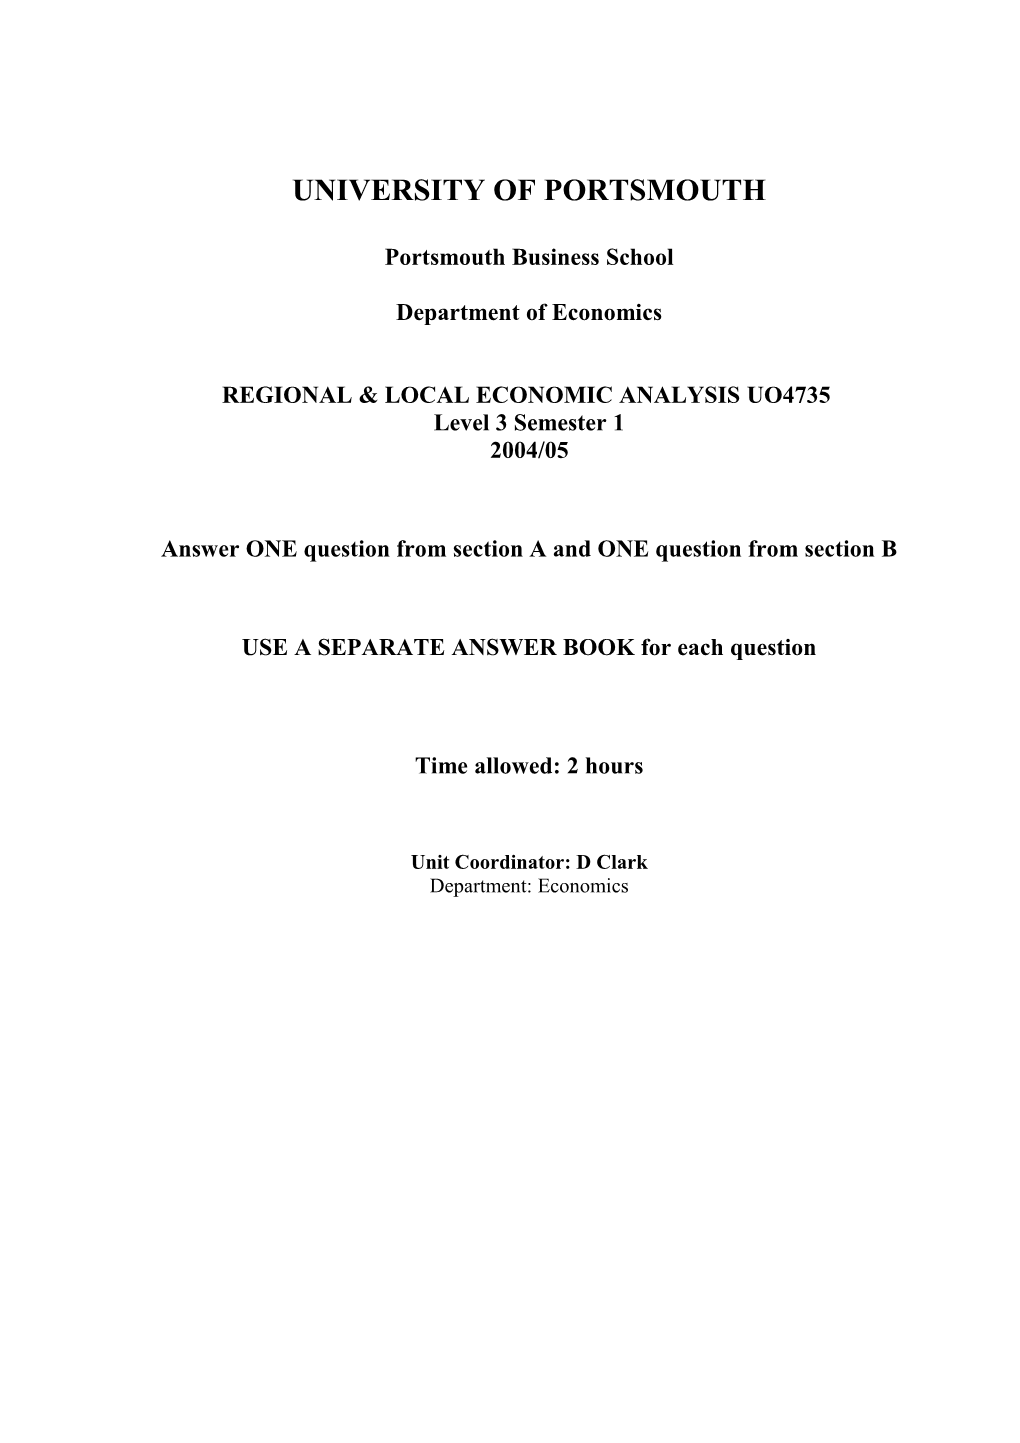 Regional & Local Economic Analysis Exam 2004/5